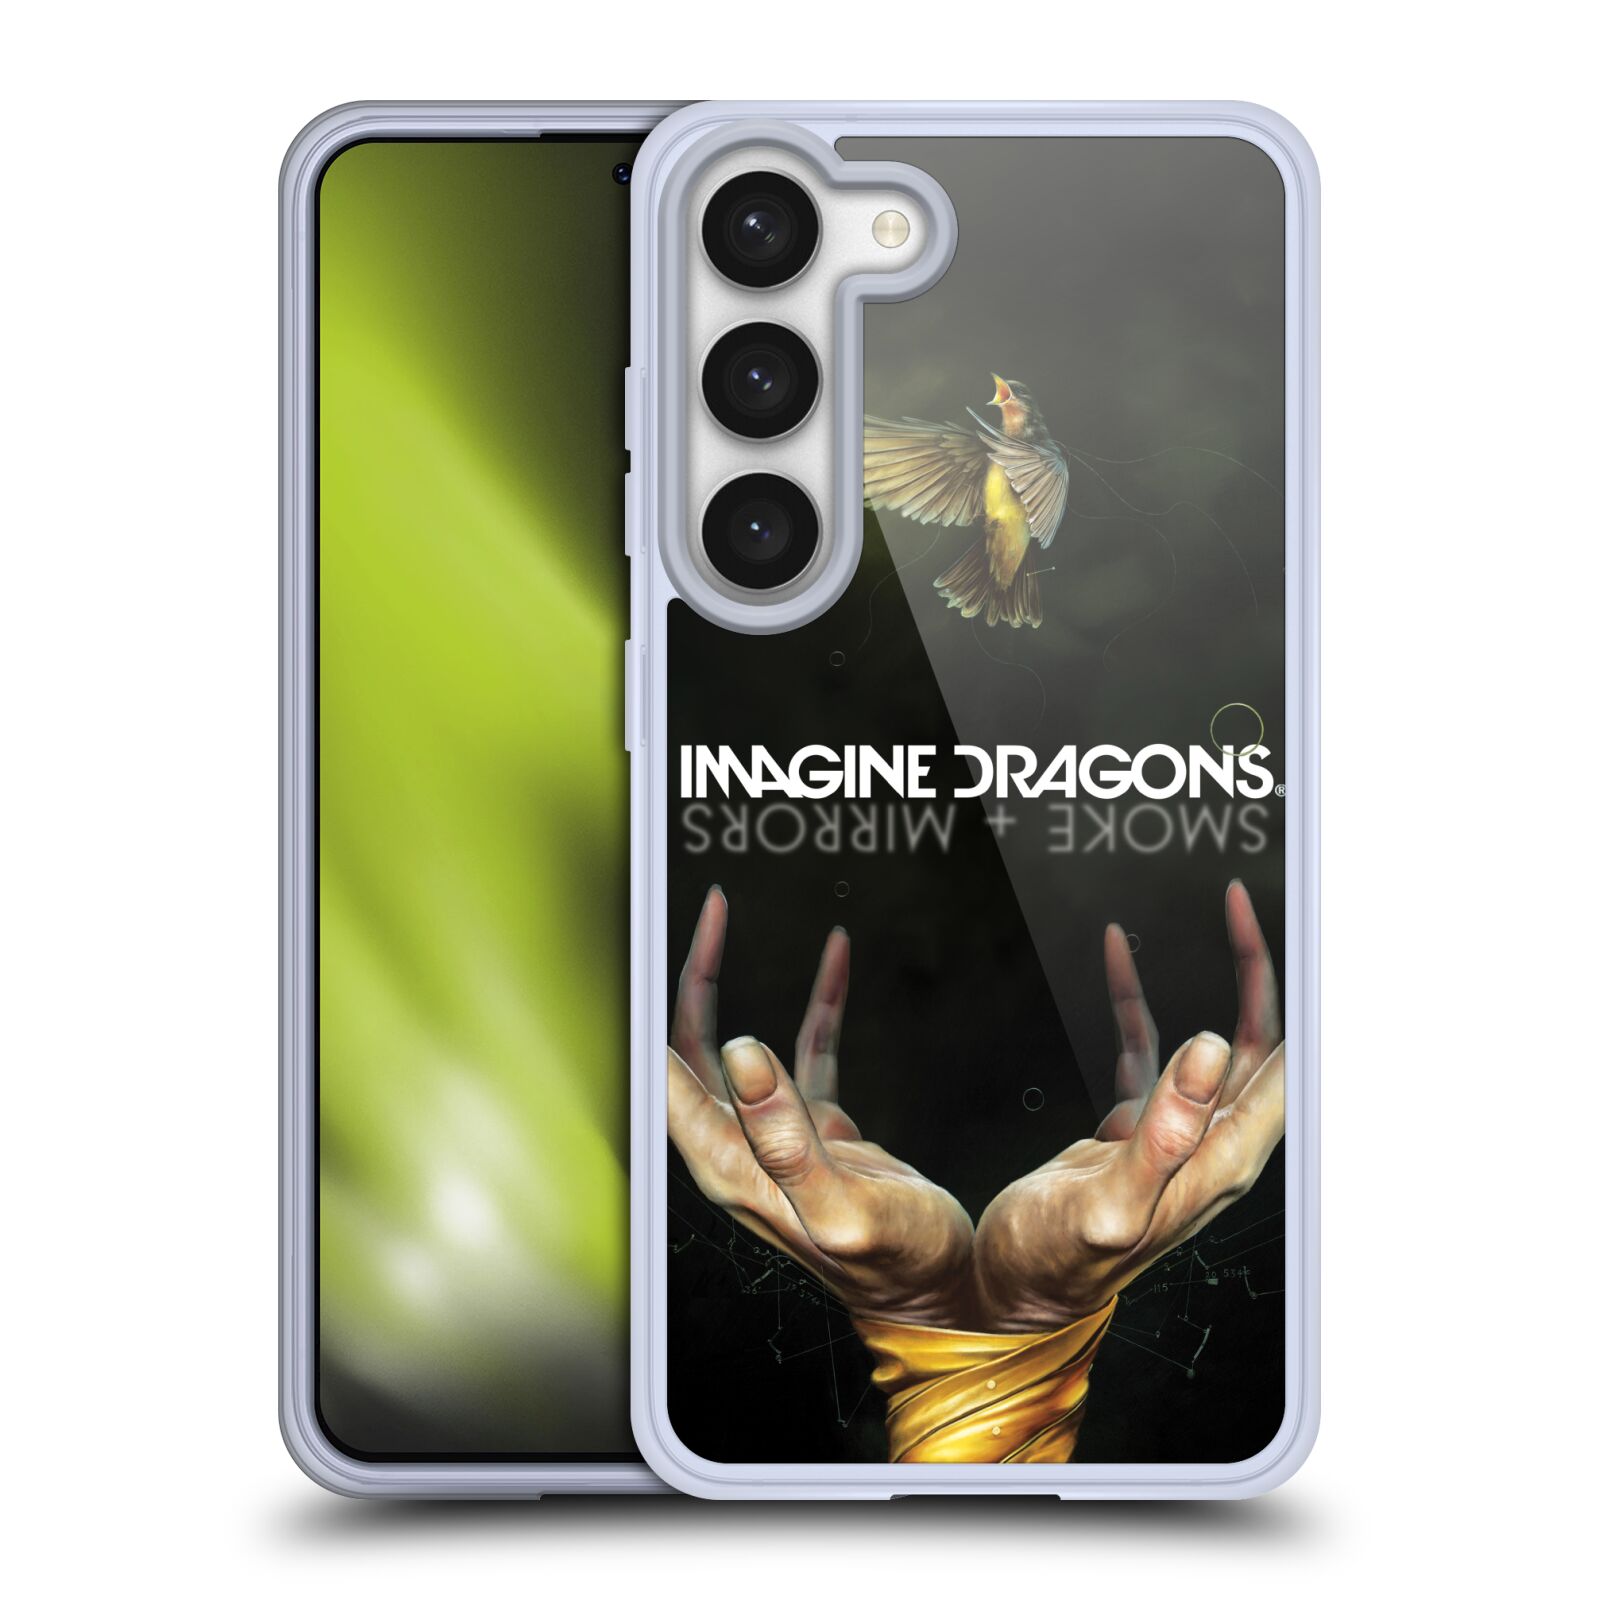 Silikonové pouzdro na mobil Samsung Galaxy S23 - Imagine Dragons - Smoke And Mirrors (Silikonový kryt, obal, pouzdro na mobilní telefon Samsung Galaxy S23 s licencovaným motivem Imagine Dragons - Smoke And Mirrors)